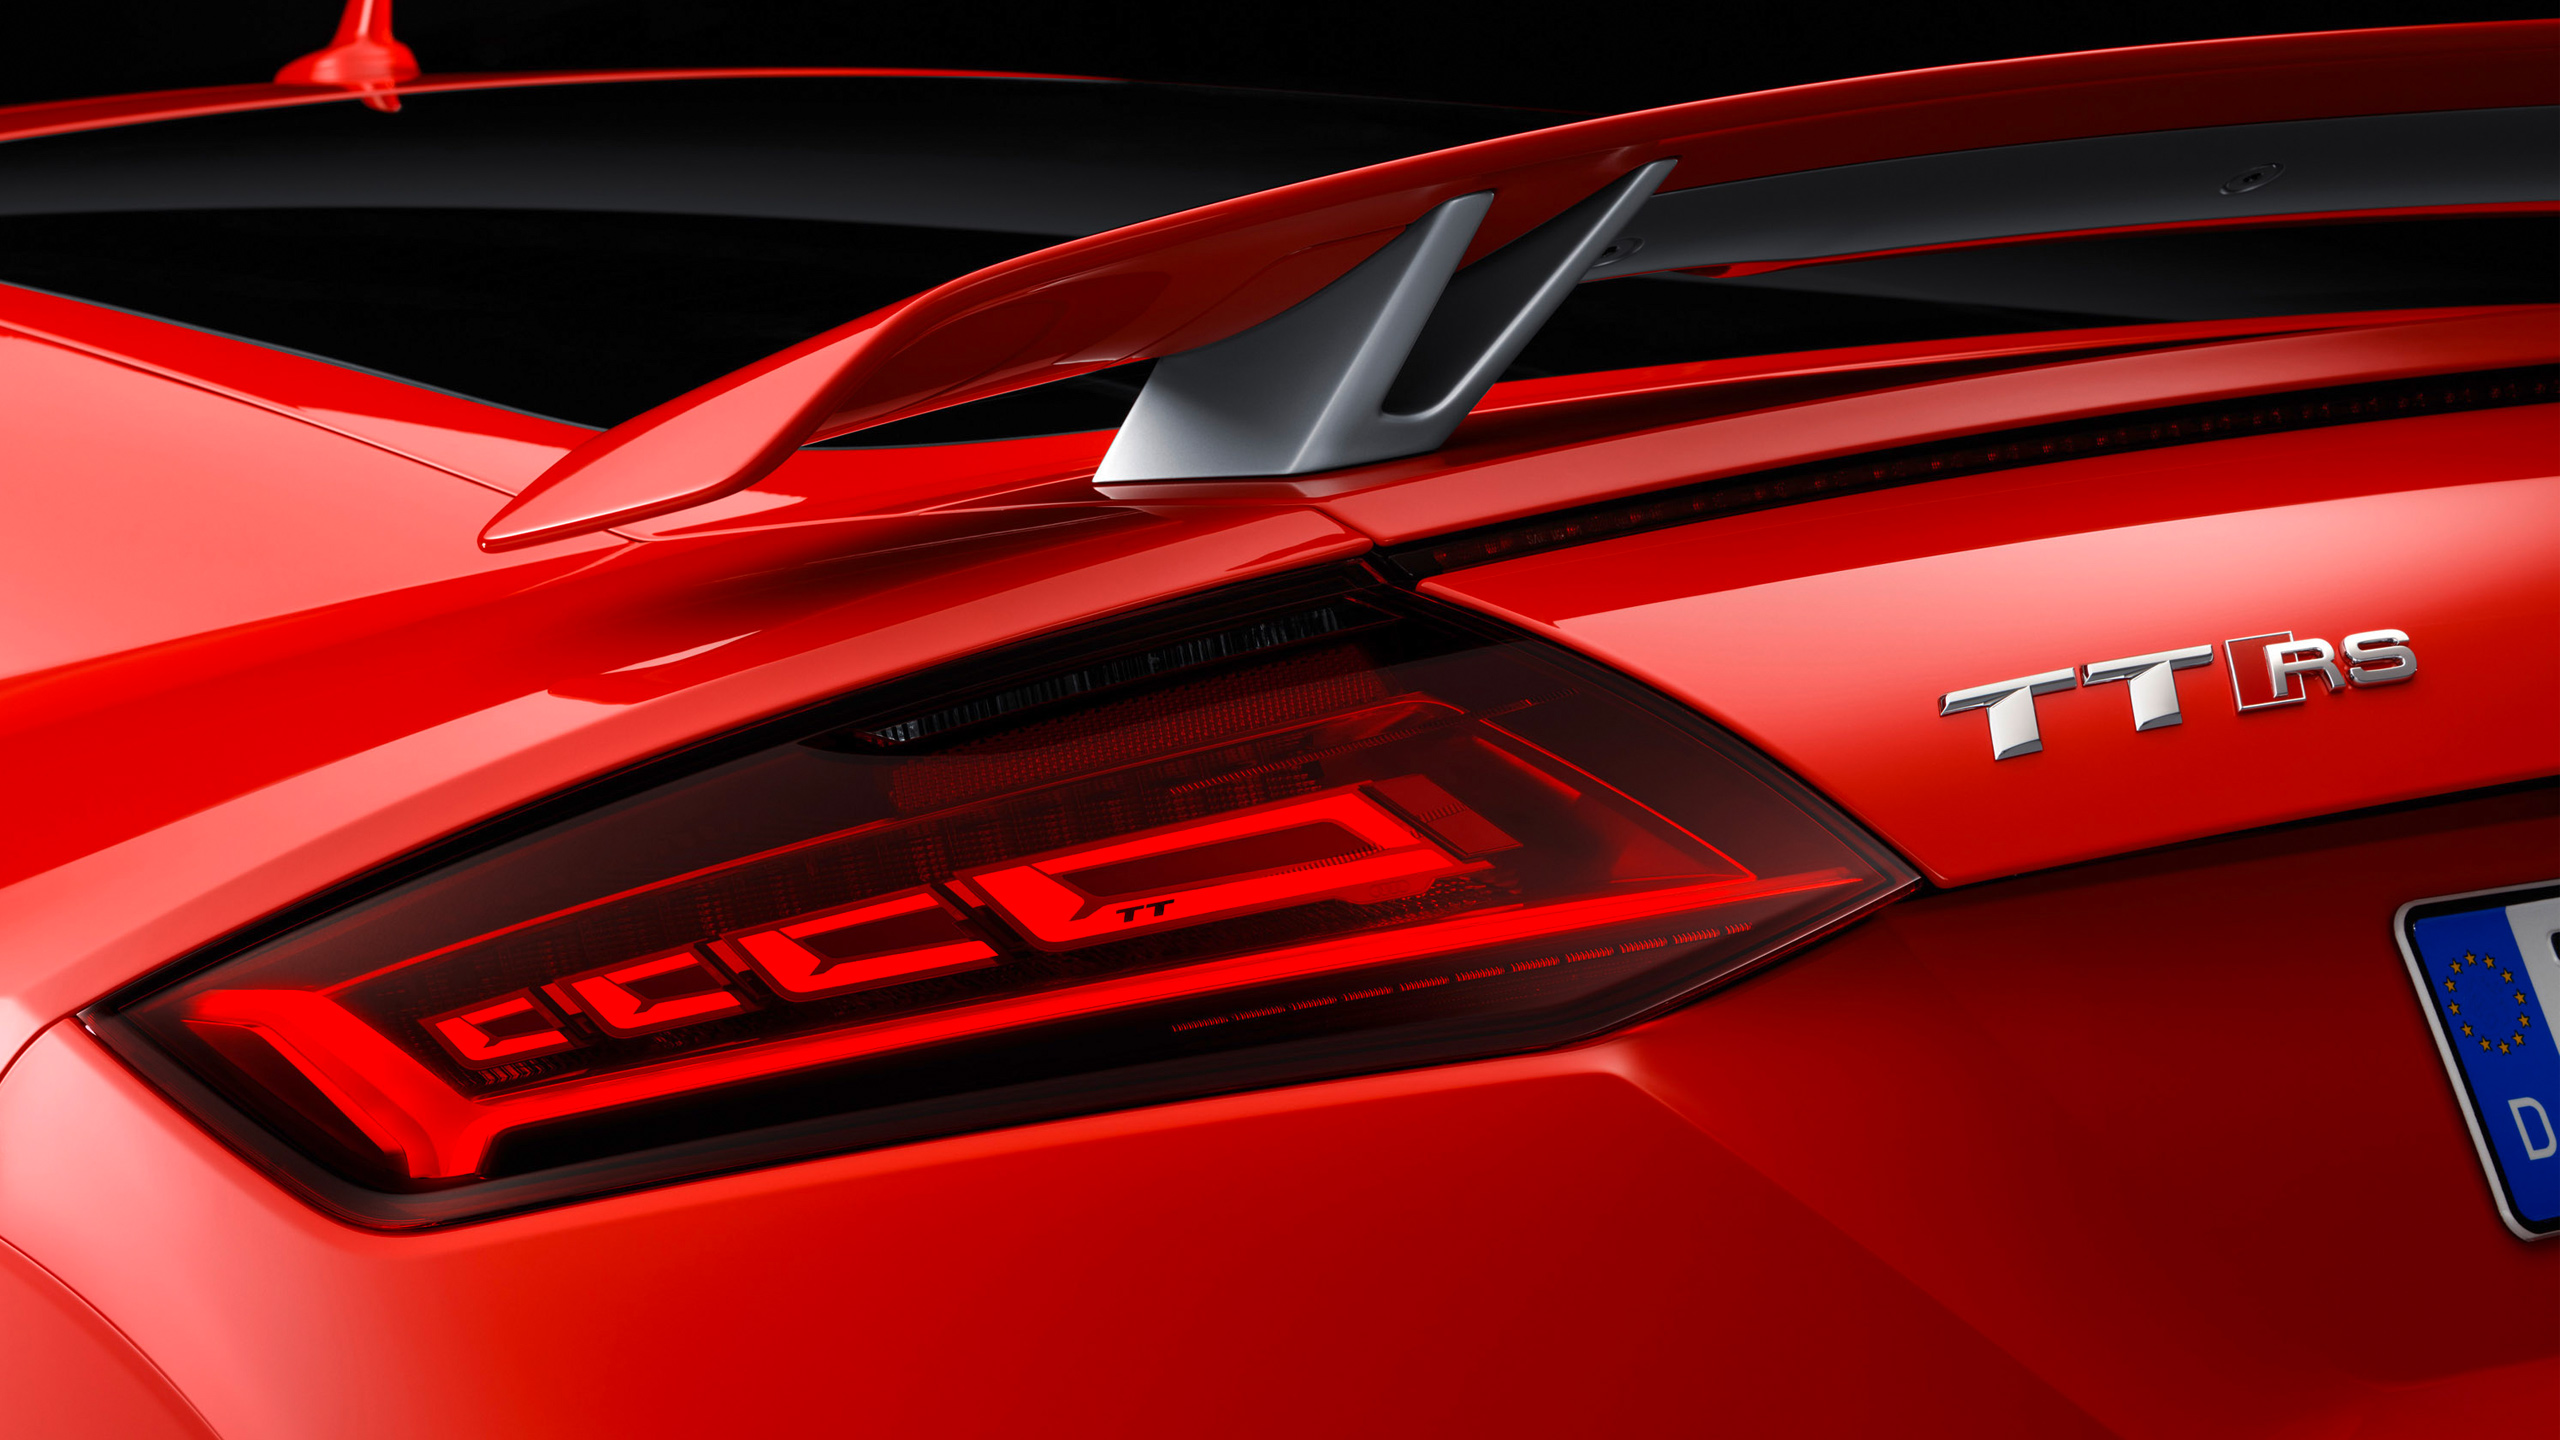 2017 Audi TT RS Tail LED Lights Wallpaper - HD Car Wallpapers #6992